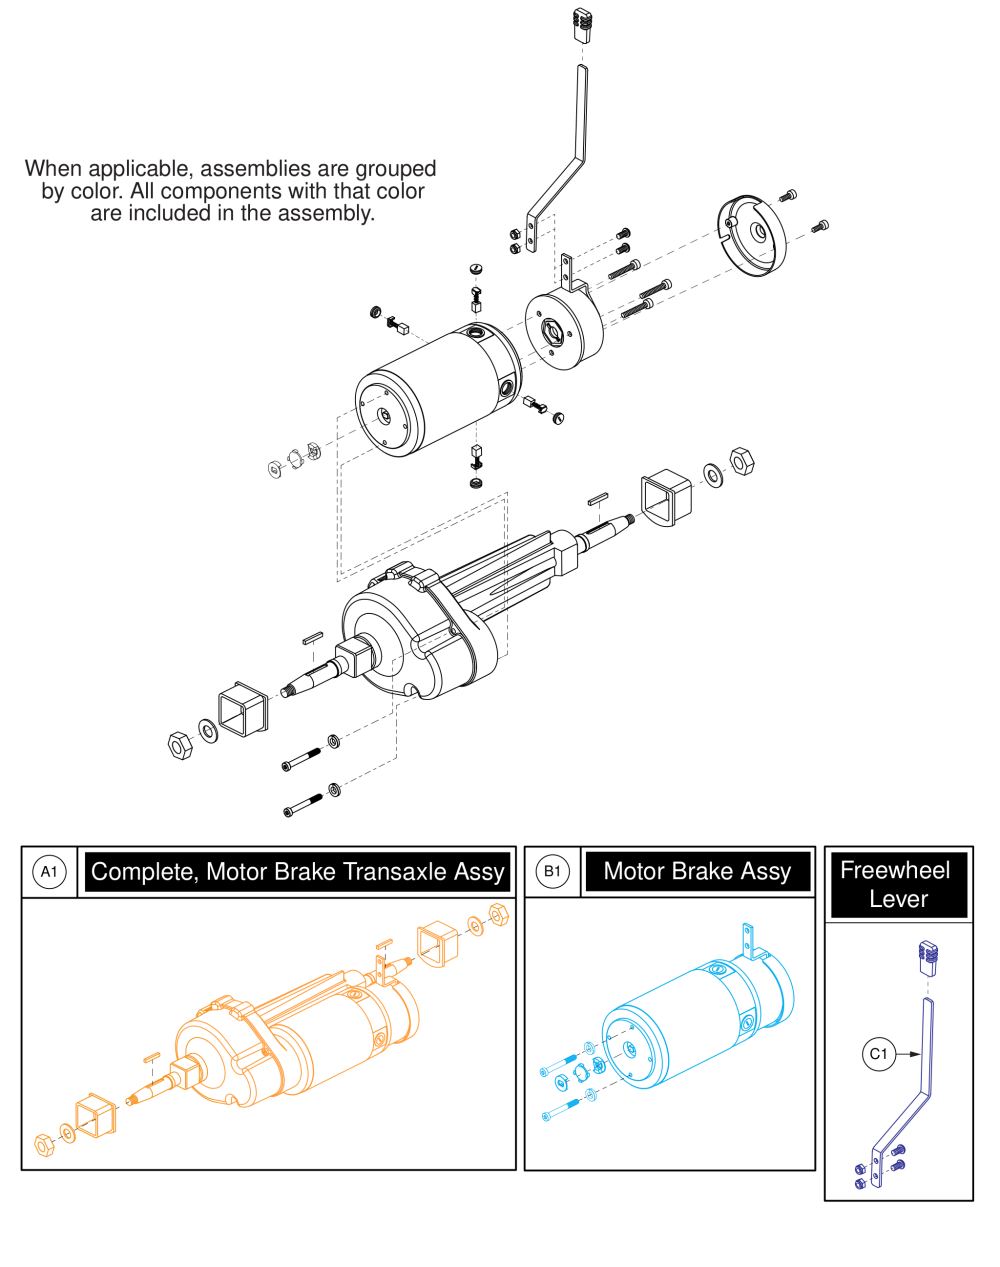 Transaxle/motor Brake Assy, Pursuit 2 parts diagram